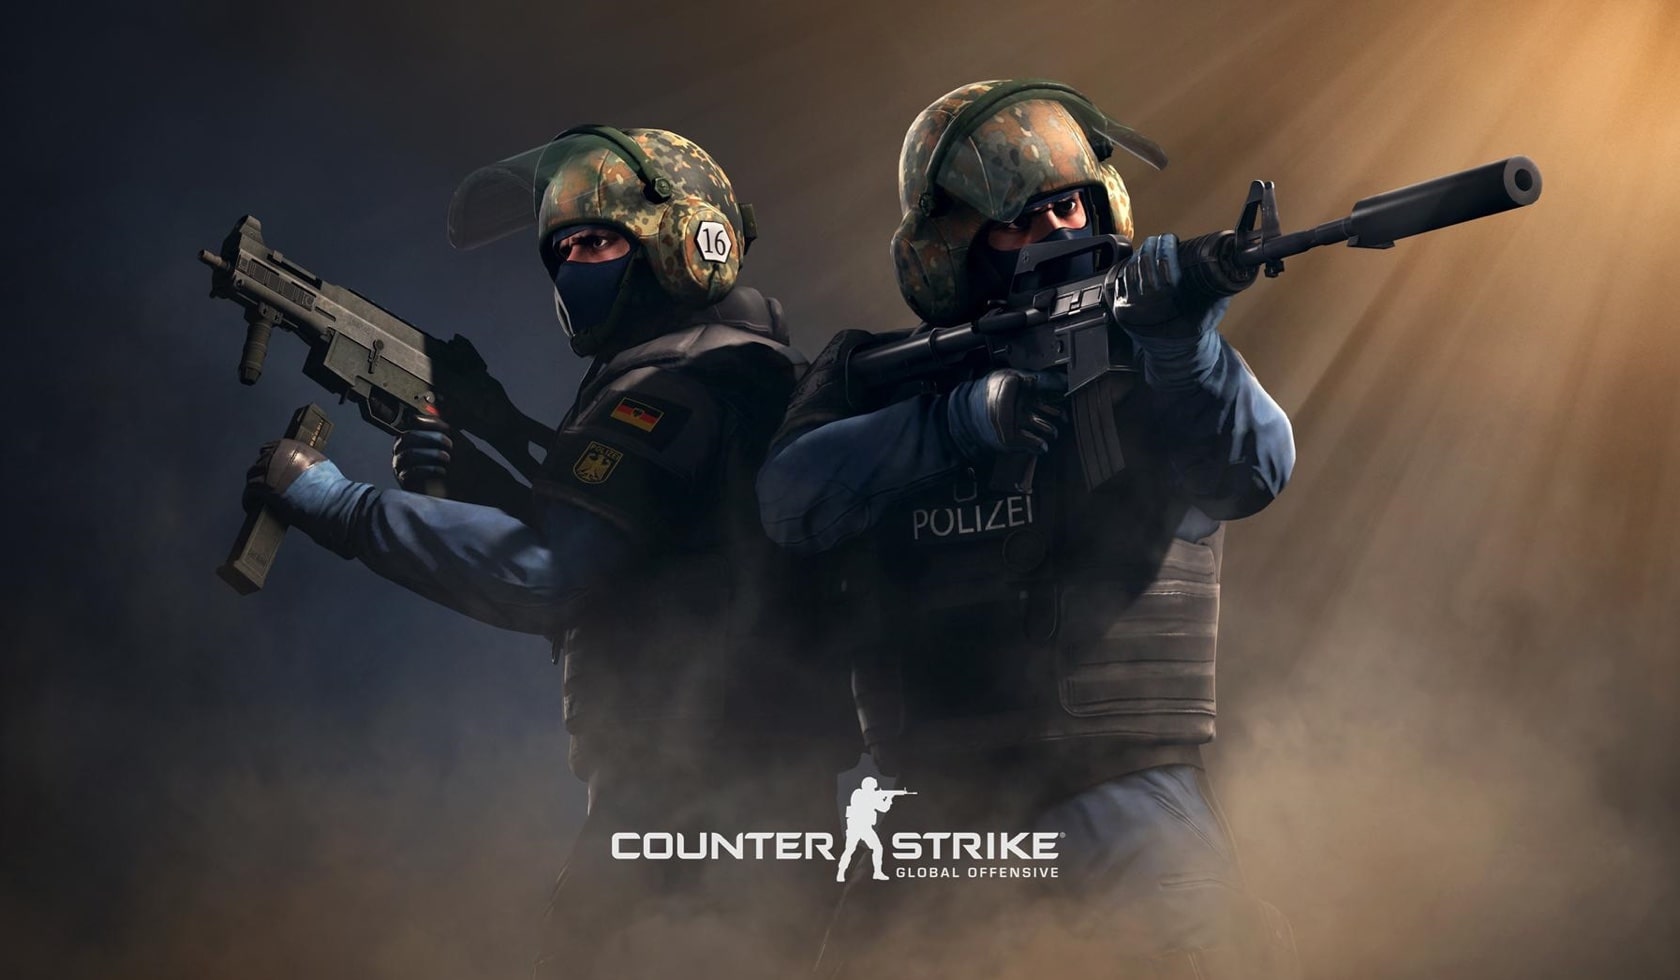 Counter Strike Game Wallpaper